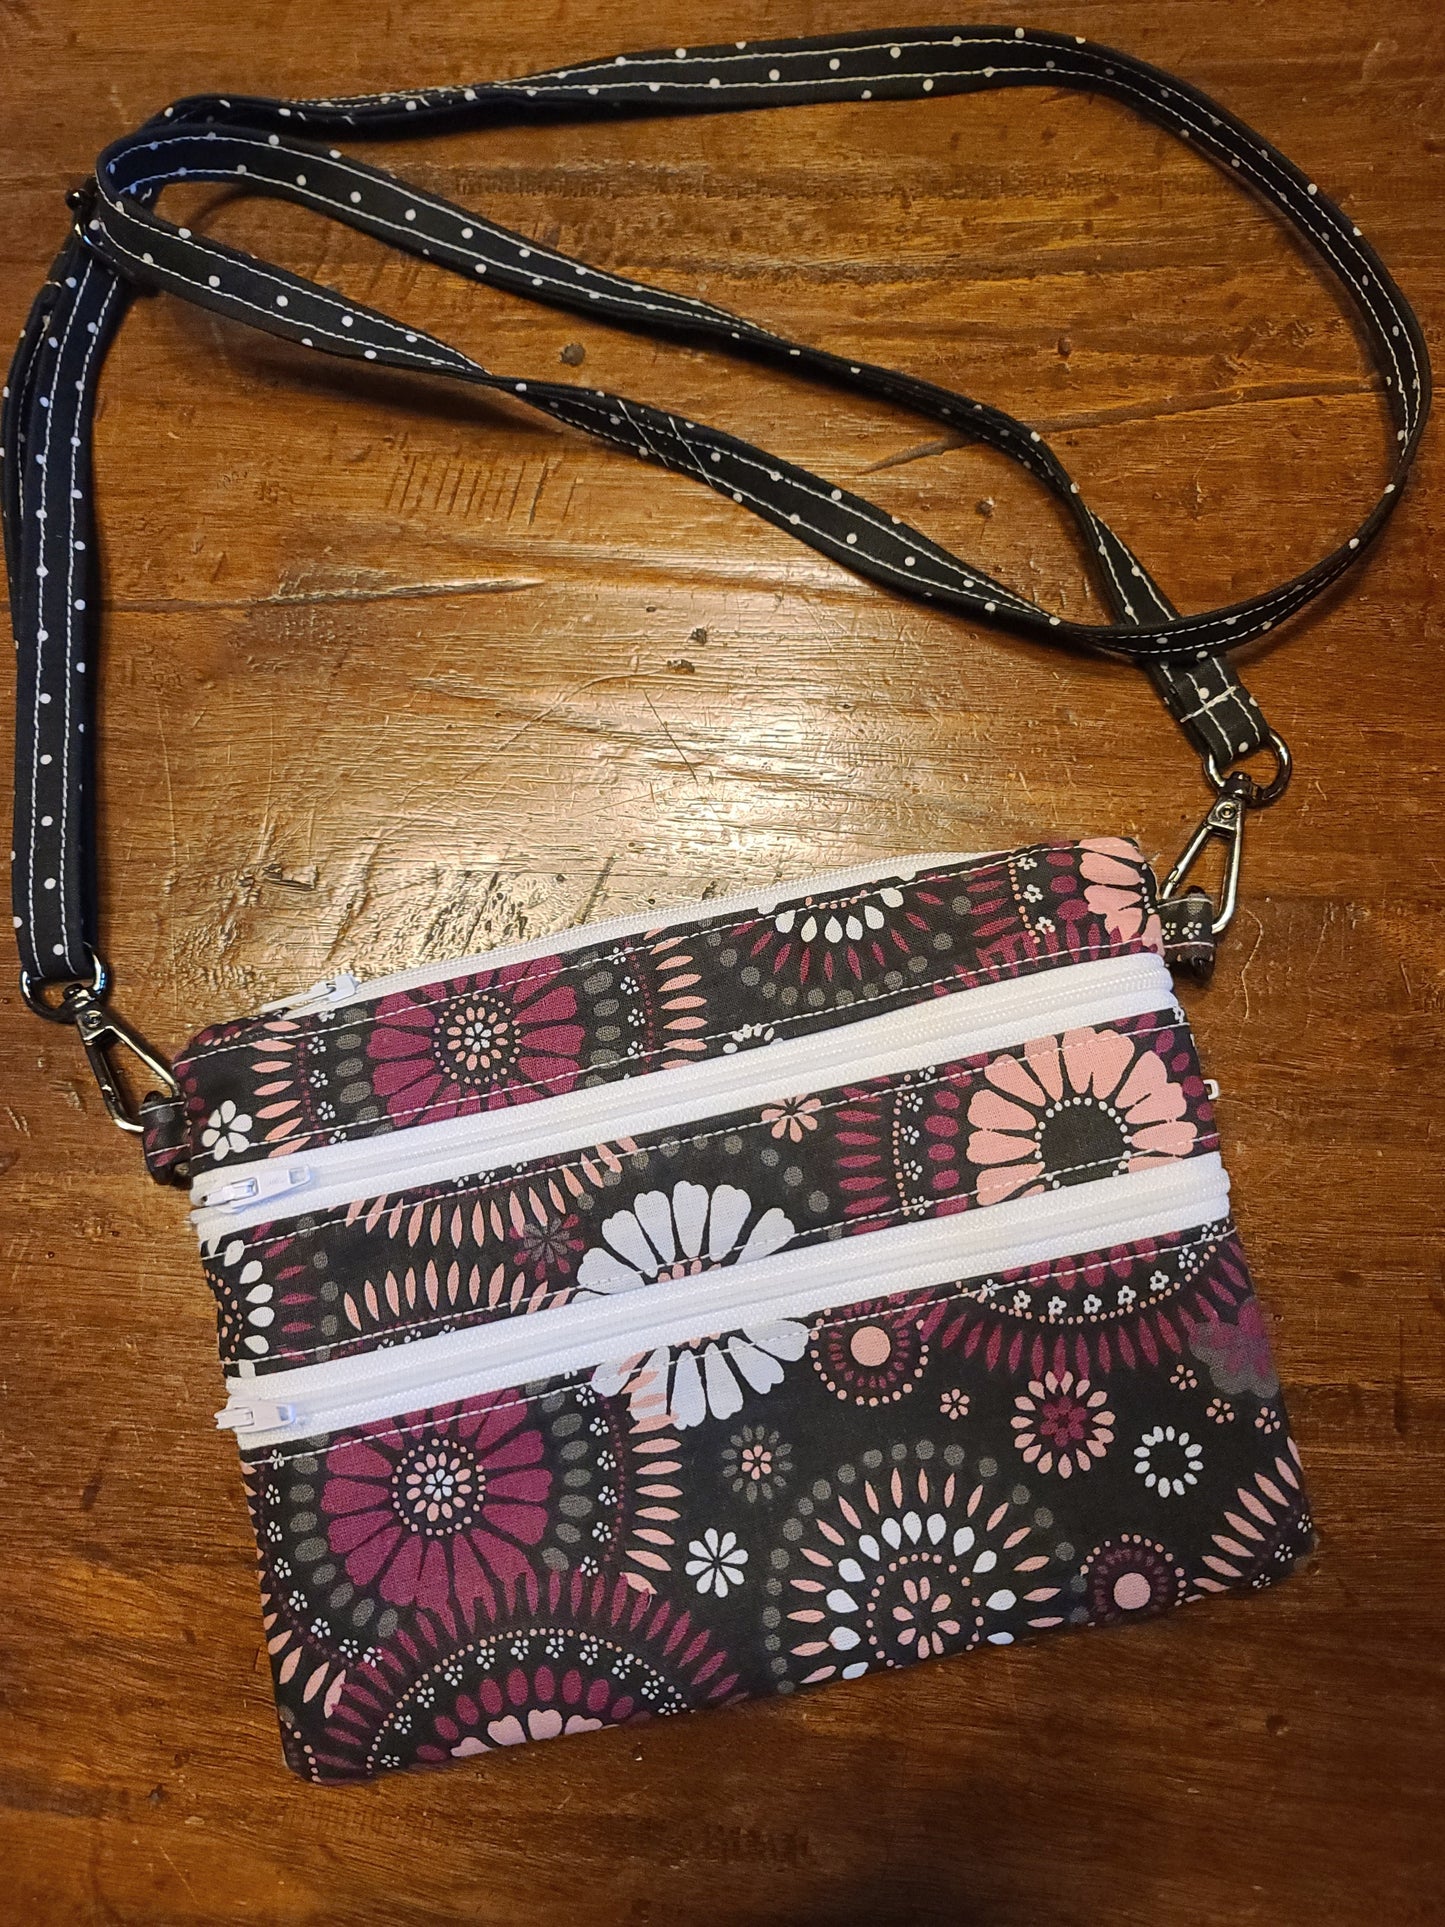 ZIPPY Crossbody Bag KIT - Regular sewing machine and beginner friendly!